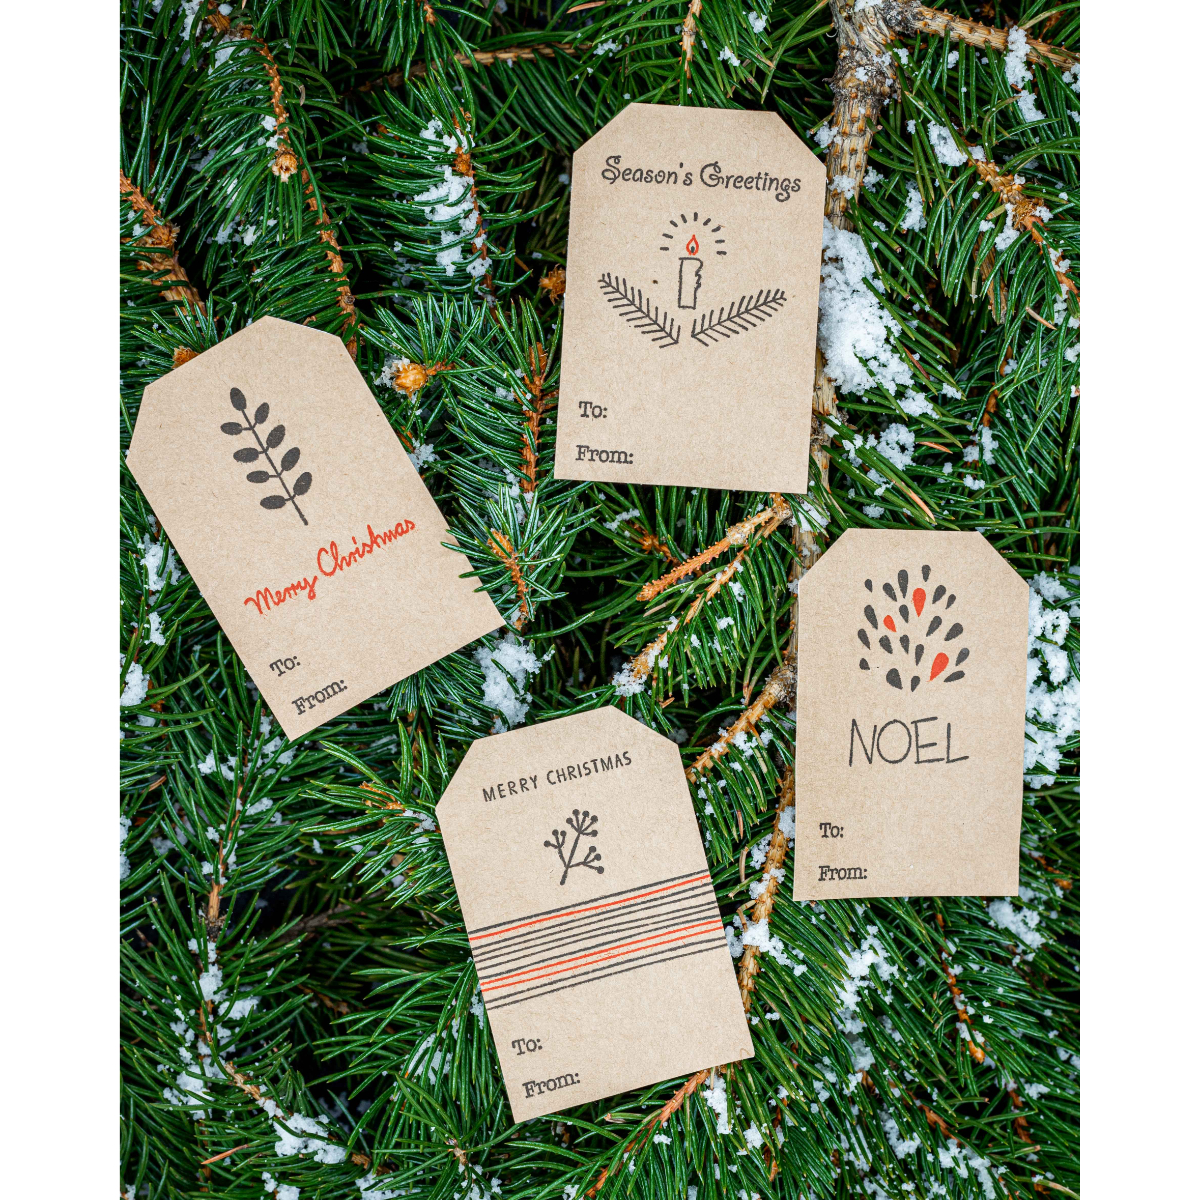 Handmade With Love Tags, Brown Kraft Tags, Made With Love Gift Tags, Favor  Tags, Merchandise Tags, Packaging Tags, Christmas Handmade Tags 